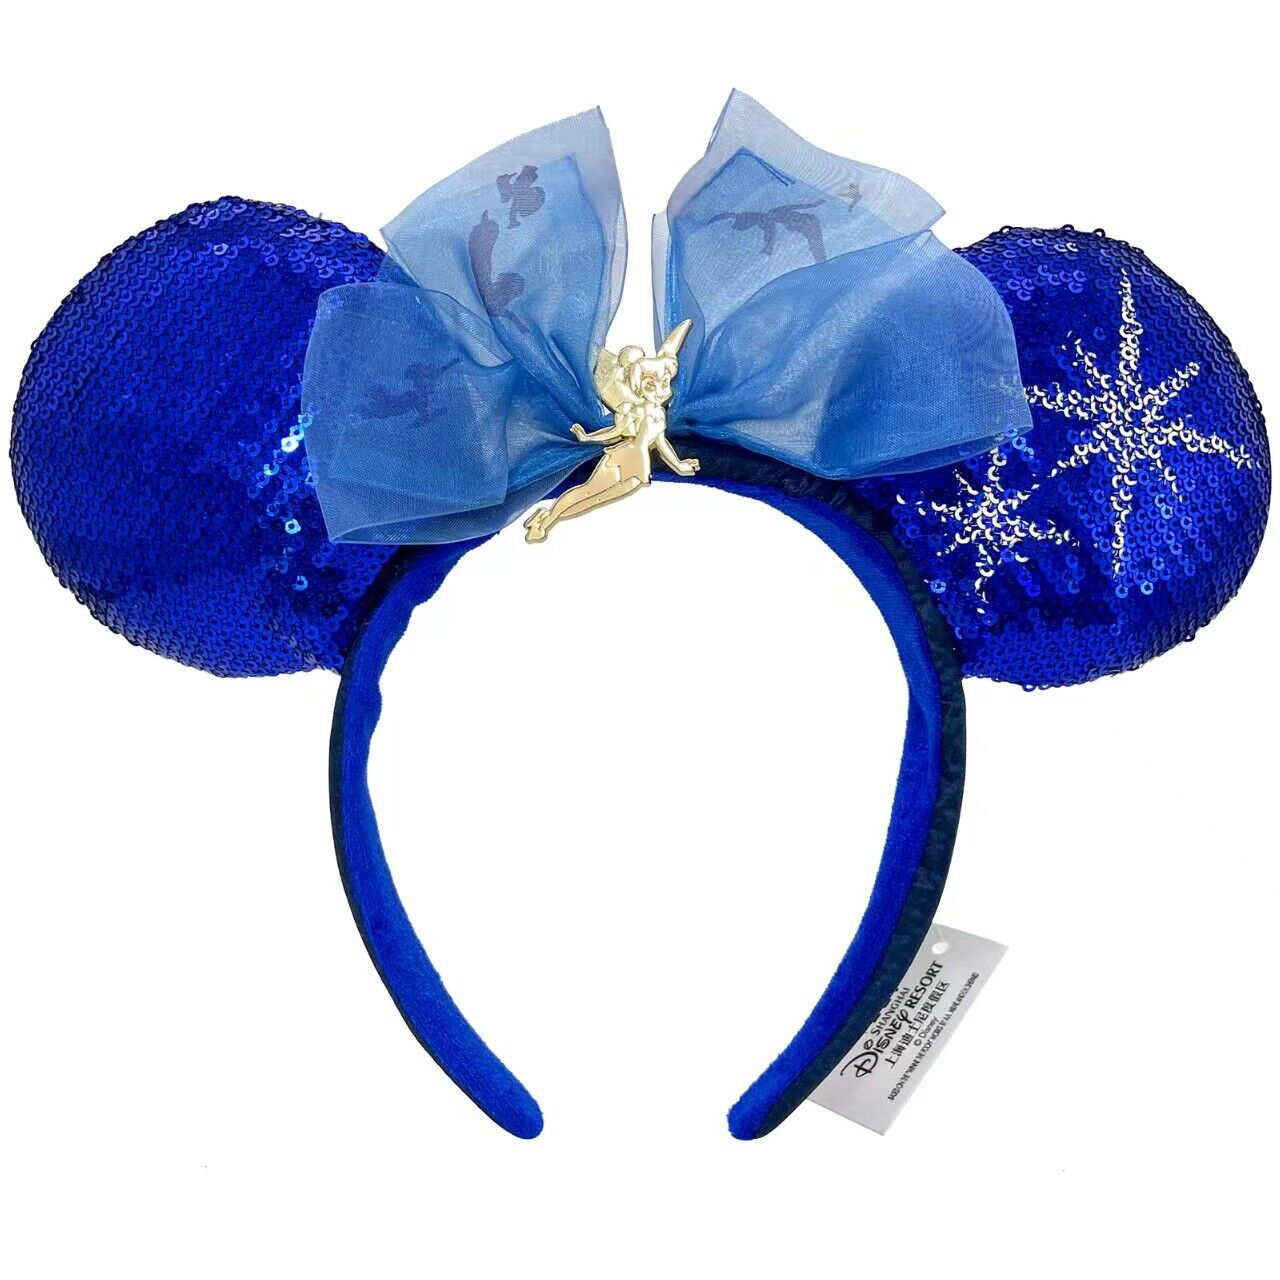 Tinker Bell Rare Edition Blue Main Attraction Ear Disney Ears Peter Pan's Flight